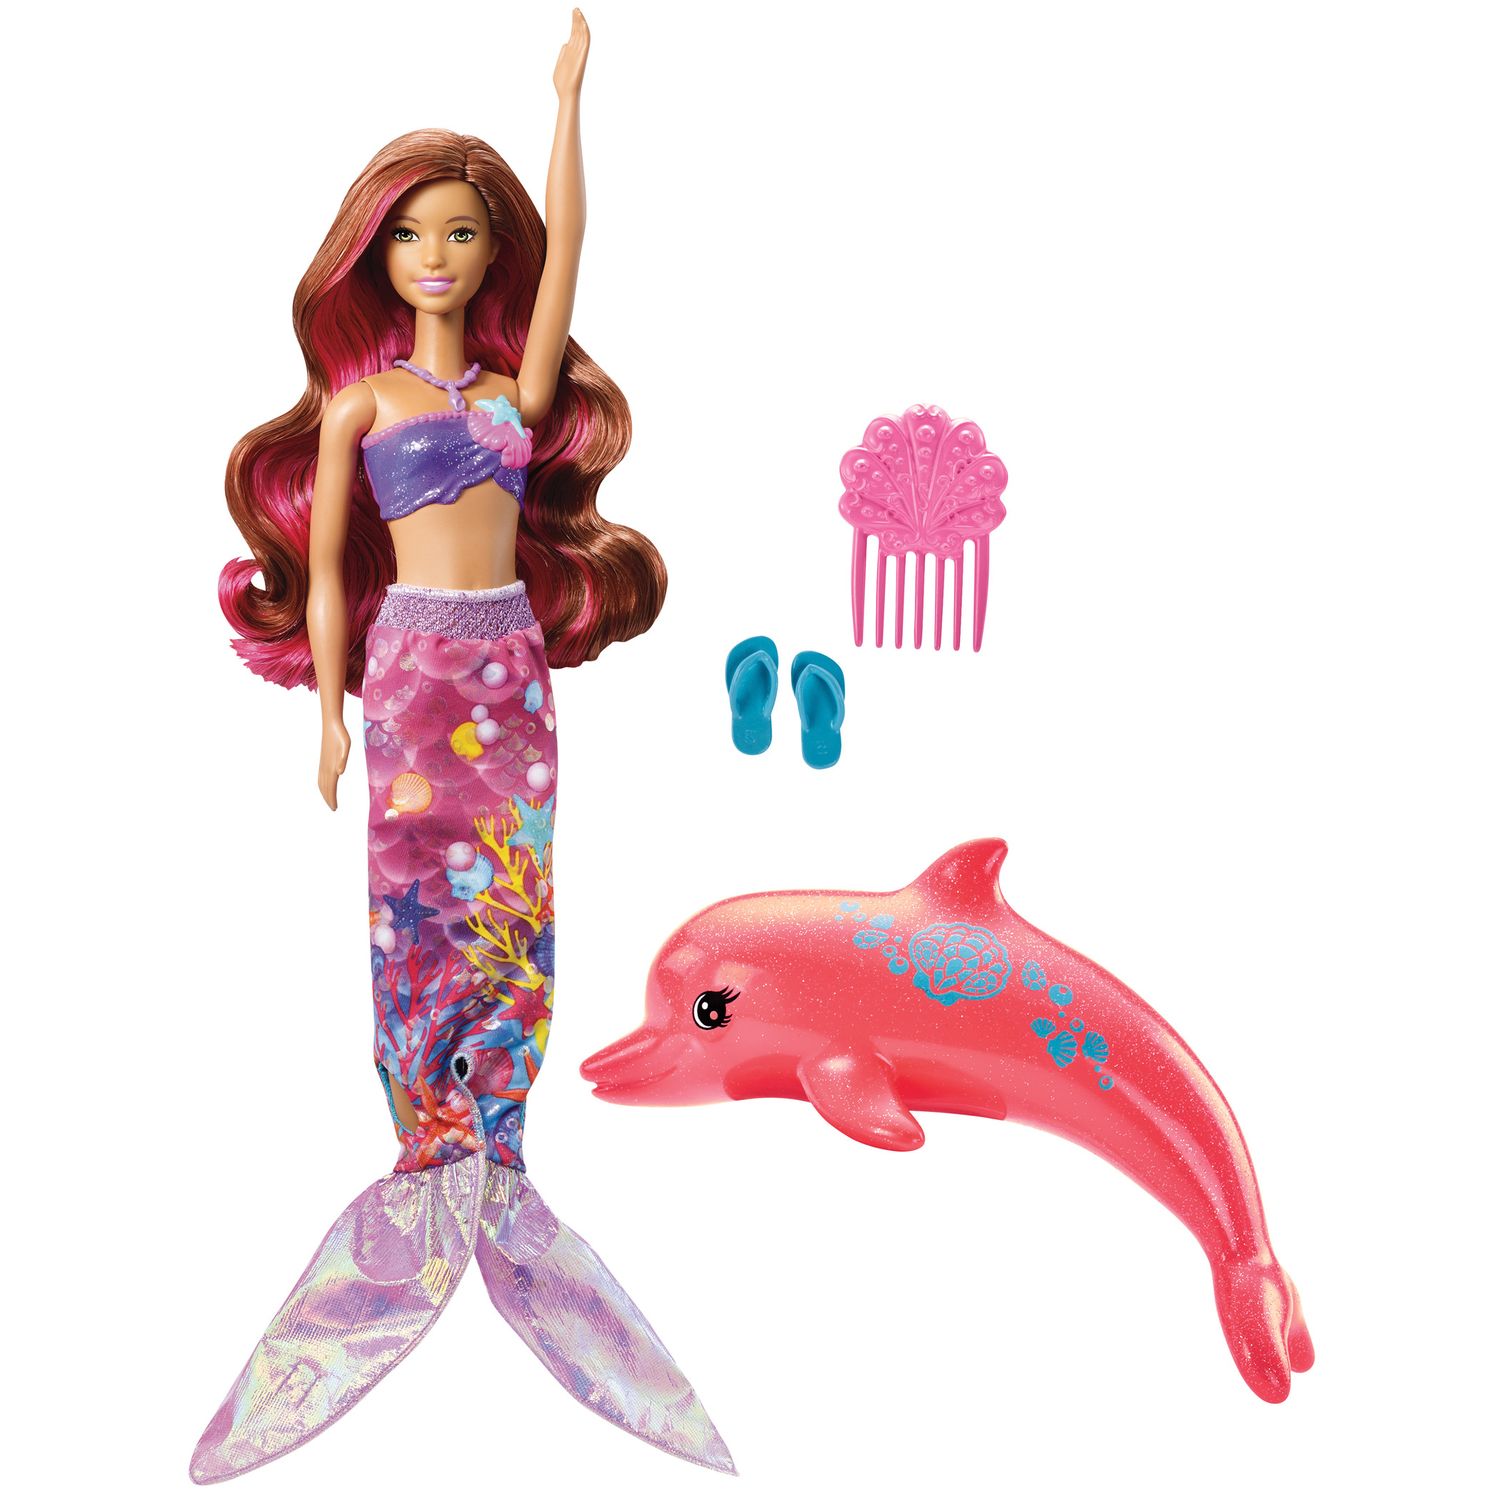 barbie dolphin magic set